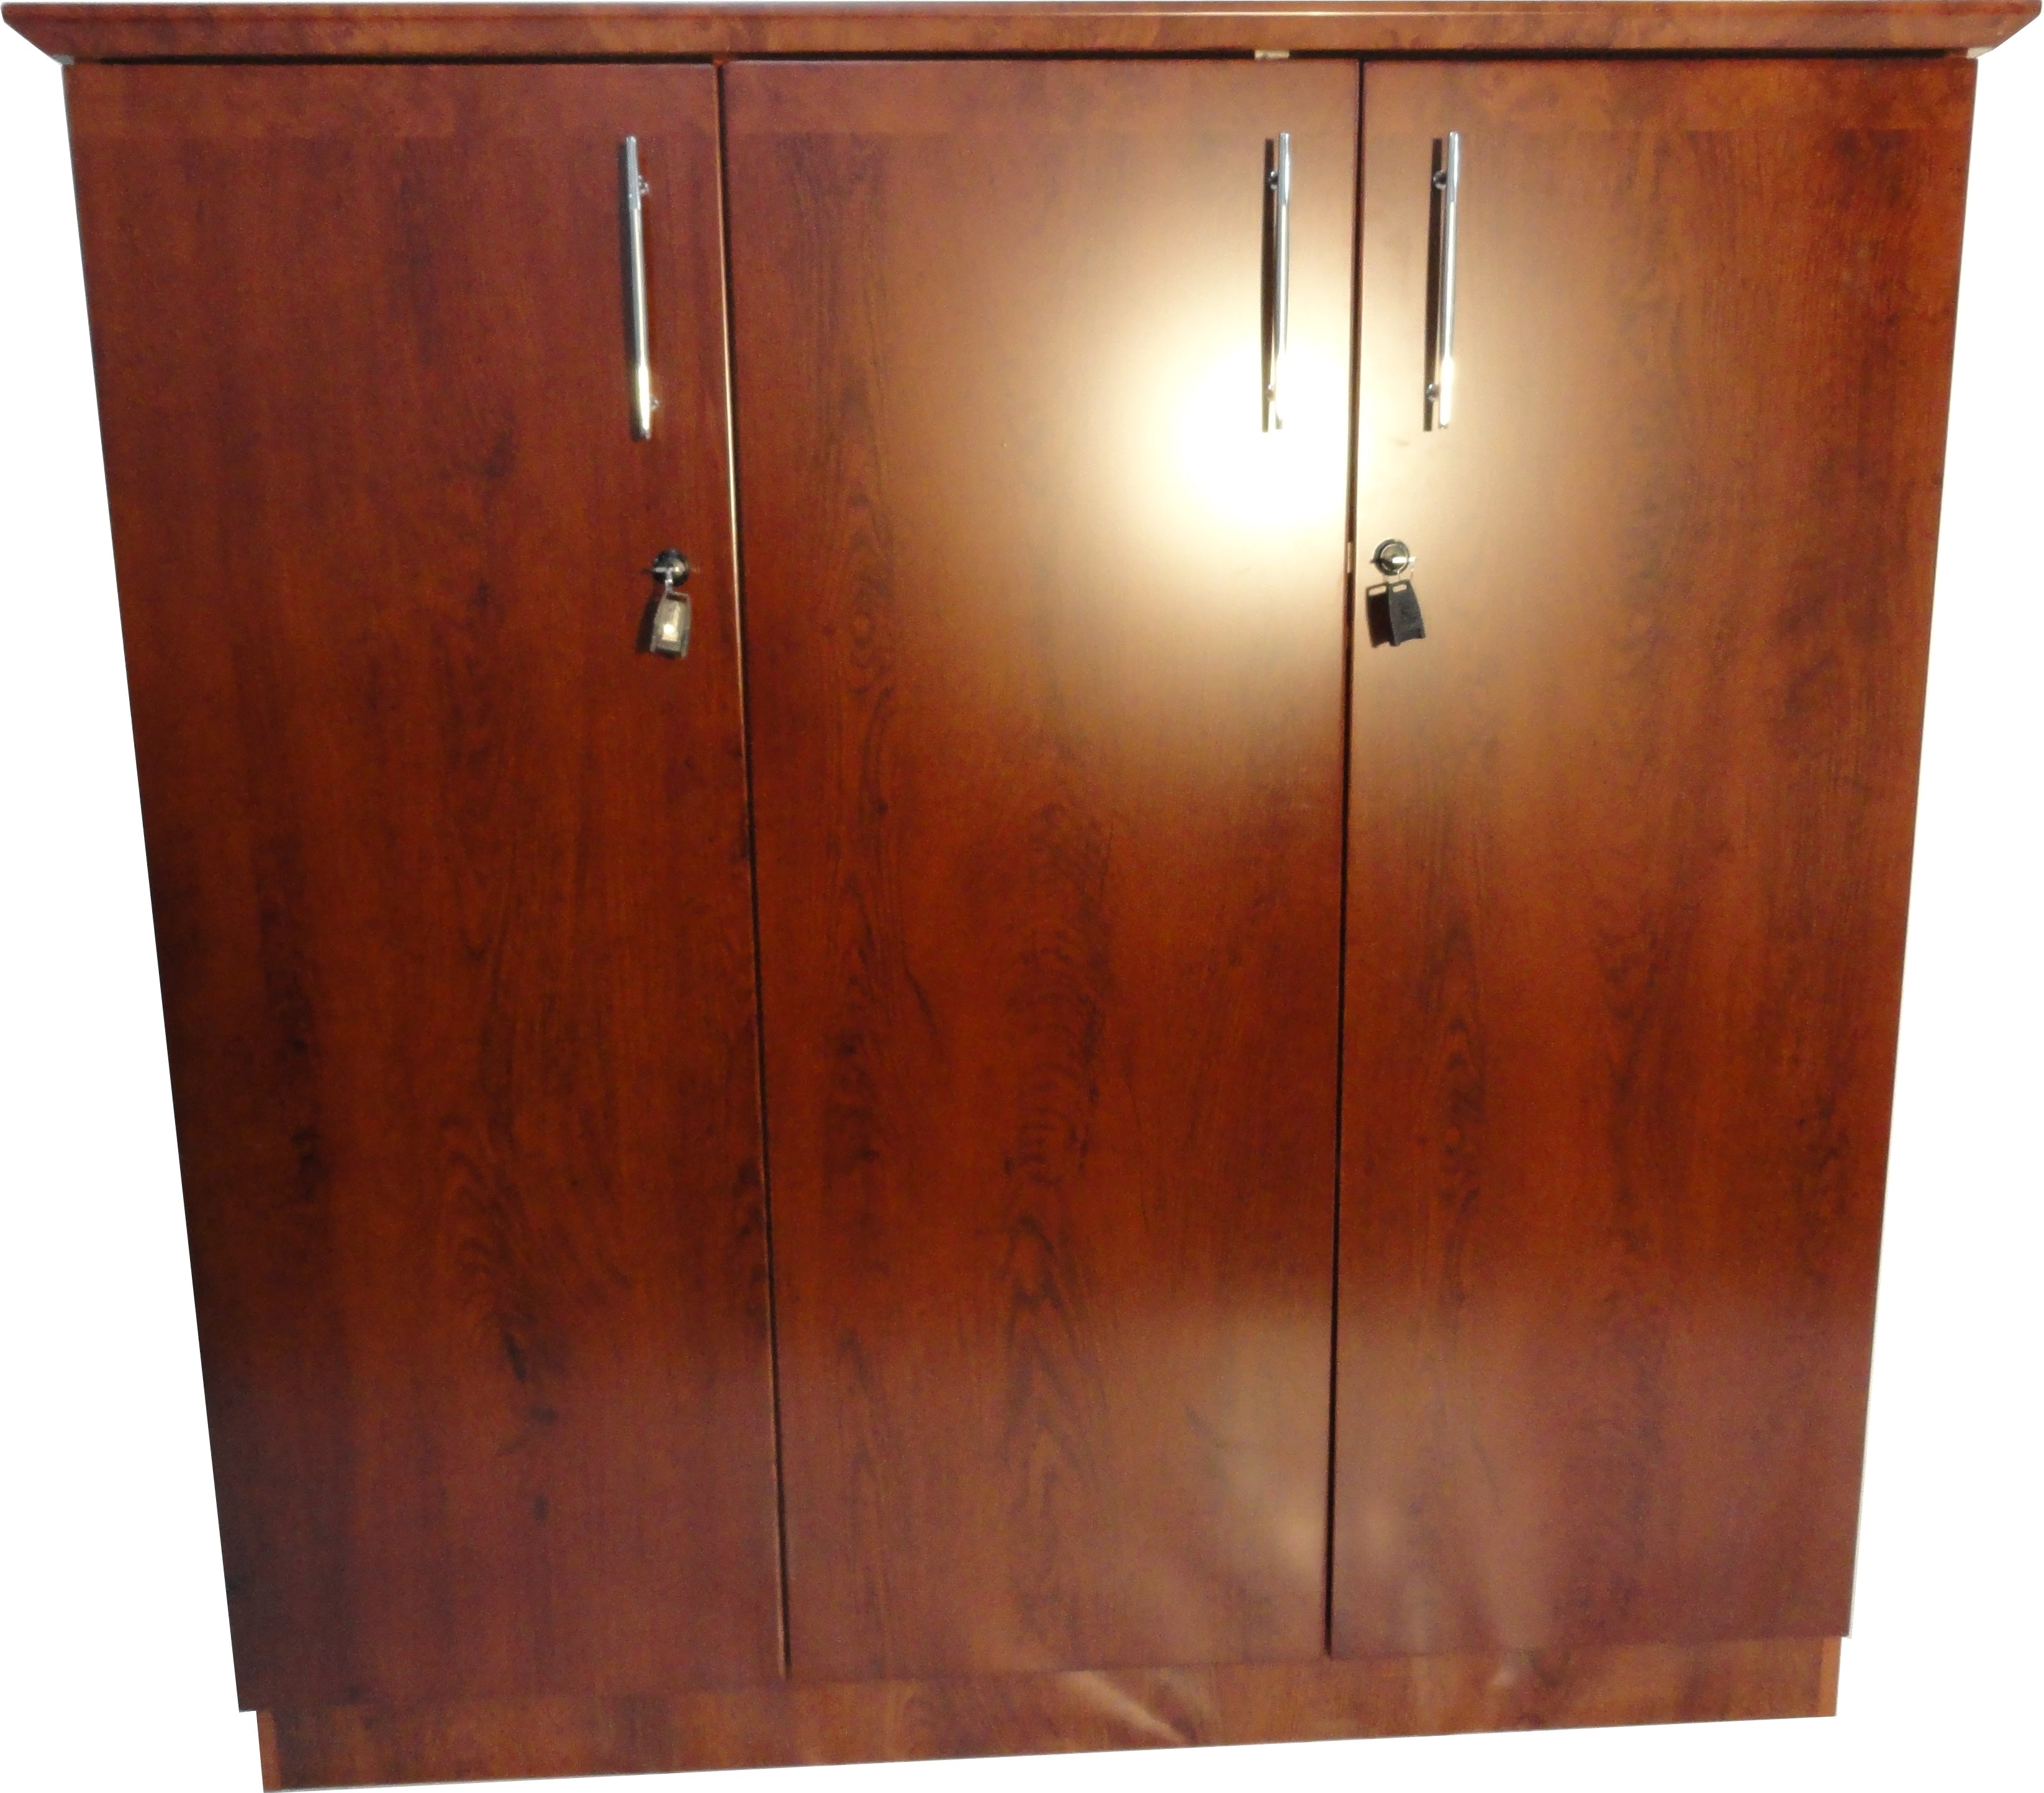 Executive Three Door Tall Medium Oak Office Cupboard - 1860T-3DR